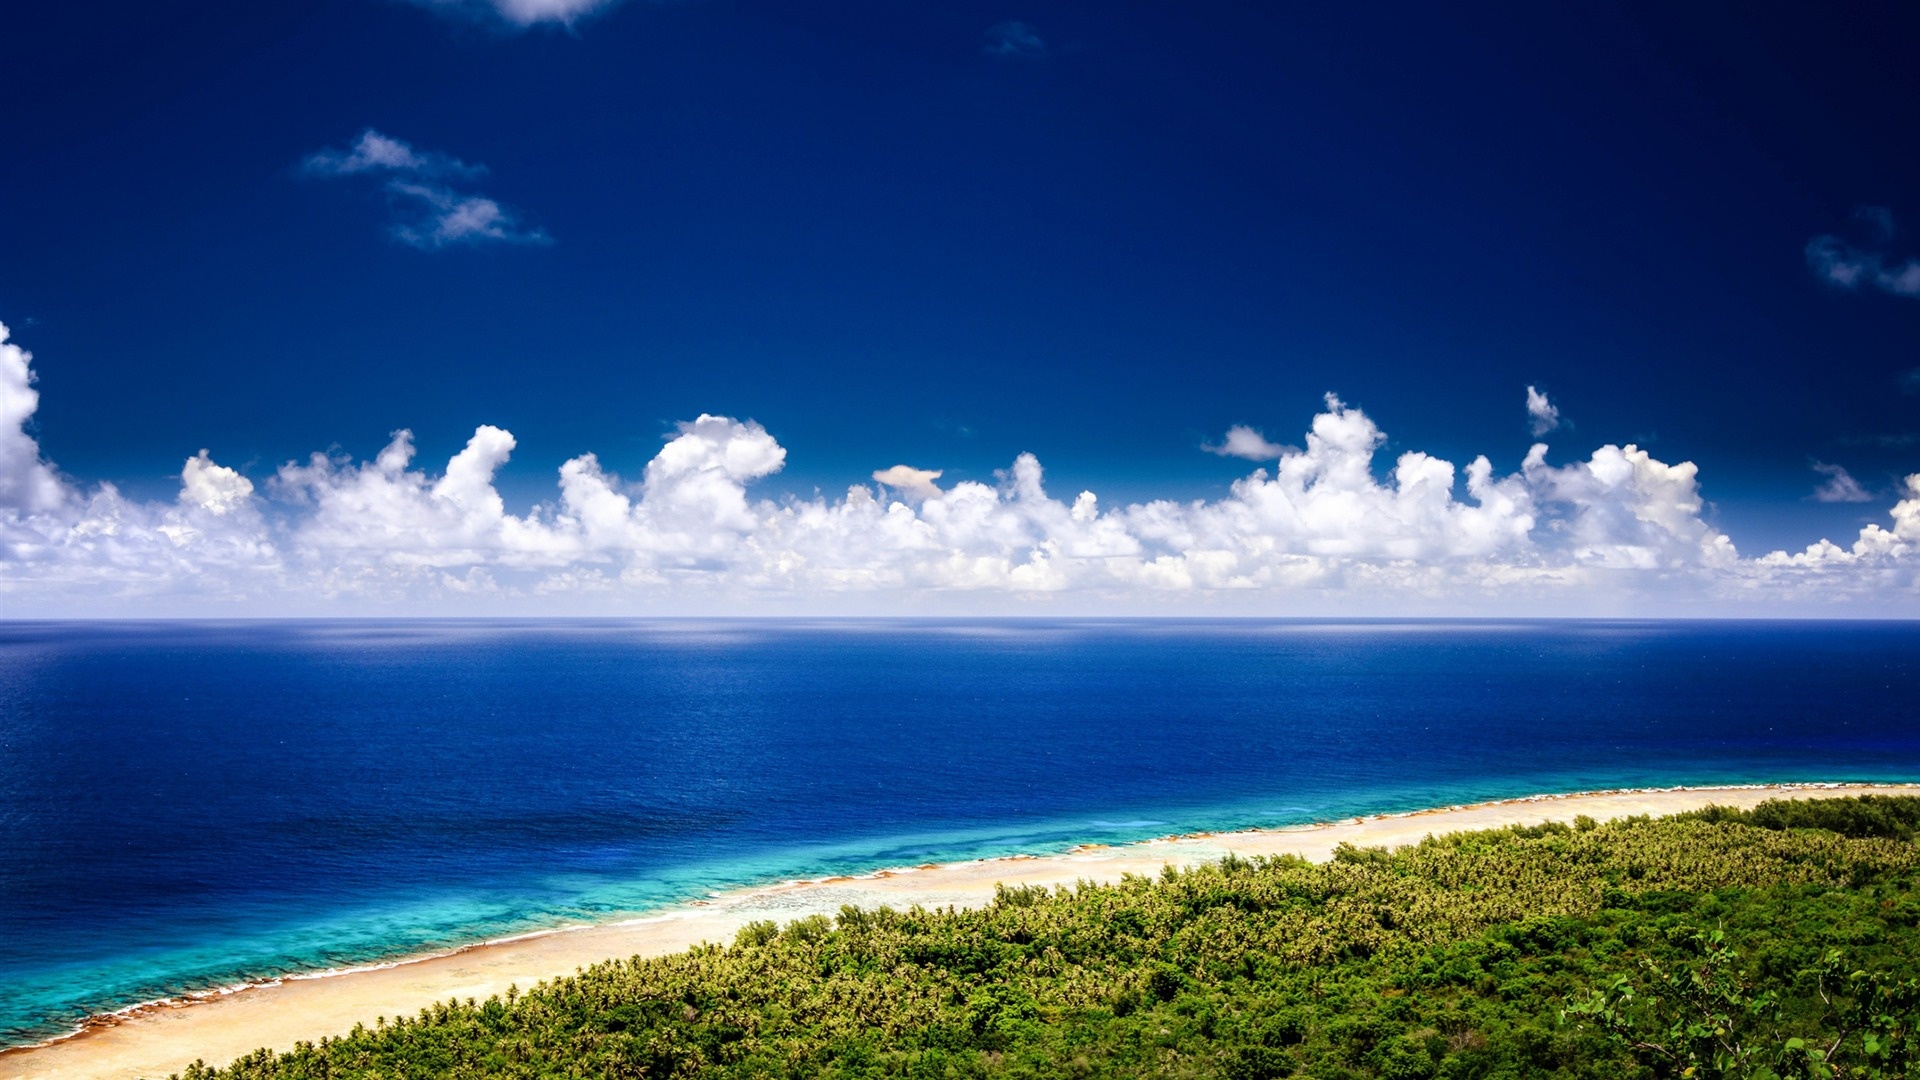 Guam beaches, Idyllic coastal beauty, Scenic beach wallpaper, High-quality imagery, 1920x1080 Full HD Desktop